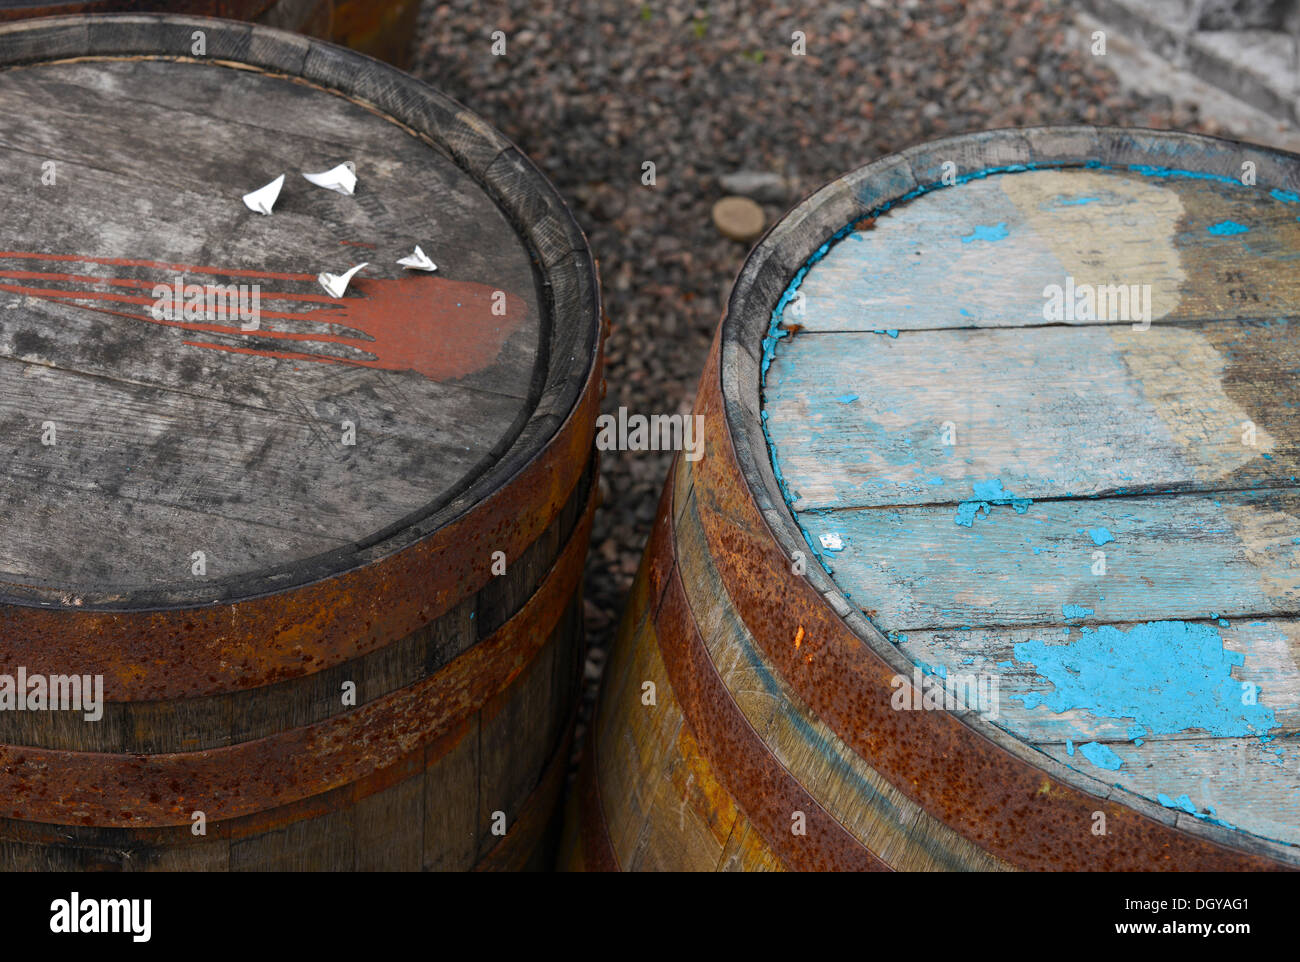 Barriles de Whiskey de América, utilizado una vez para hacer Whisky Boubon están esperando para ser reutilizado en la producción de whisky escocés Single Malt Foto de stock